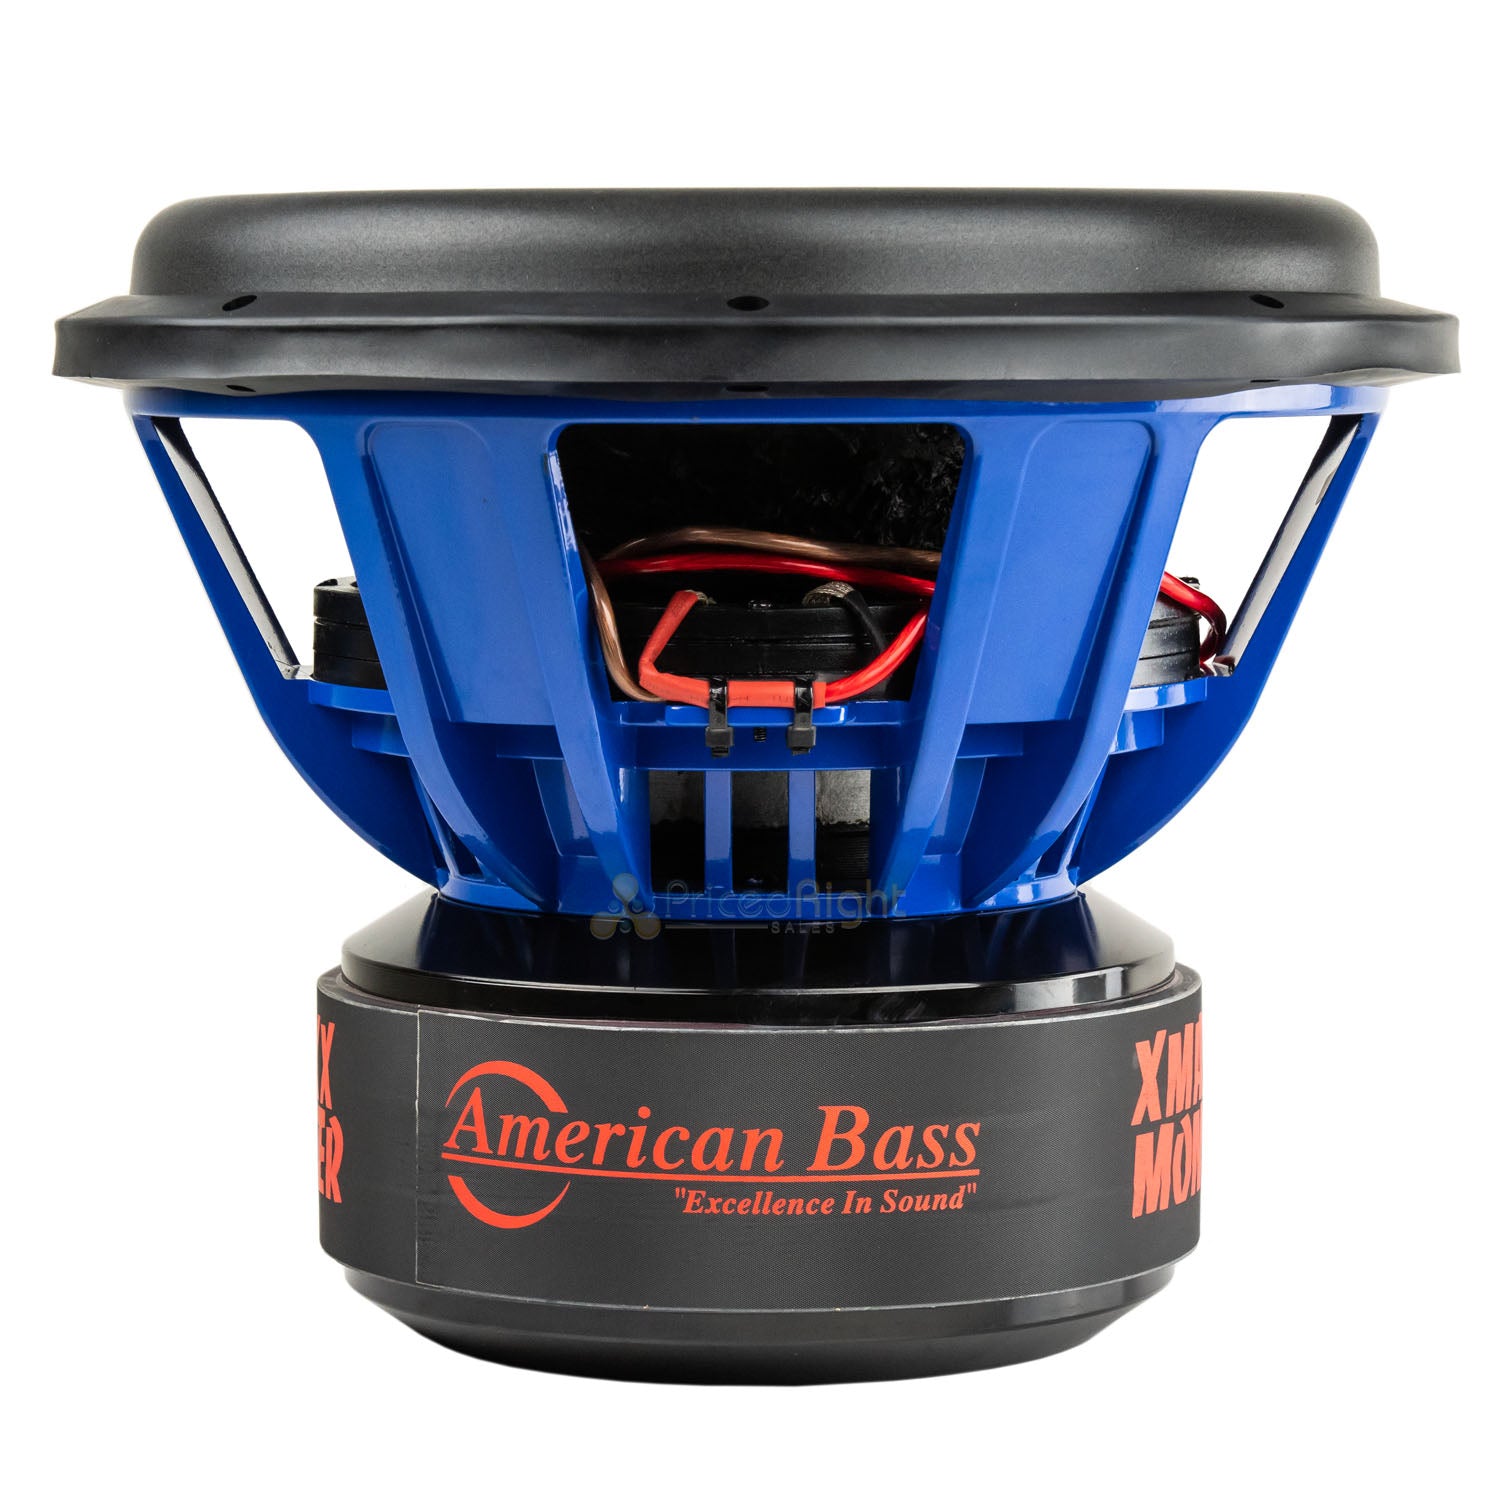 American Bass XMAXXX 15" Subwoofer 8000 Watts Max Dual 2 Ohm X-Max Monster Sub